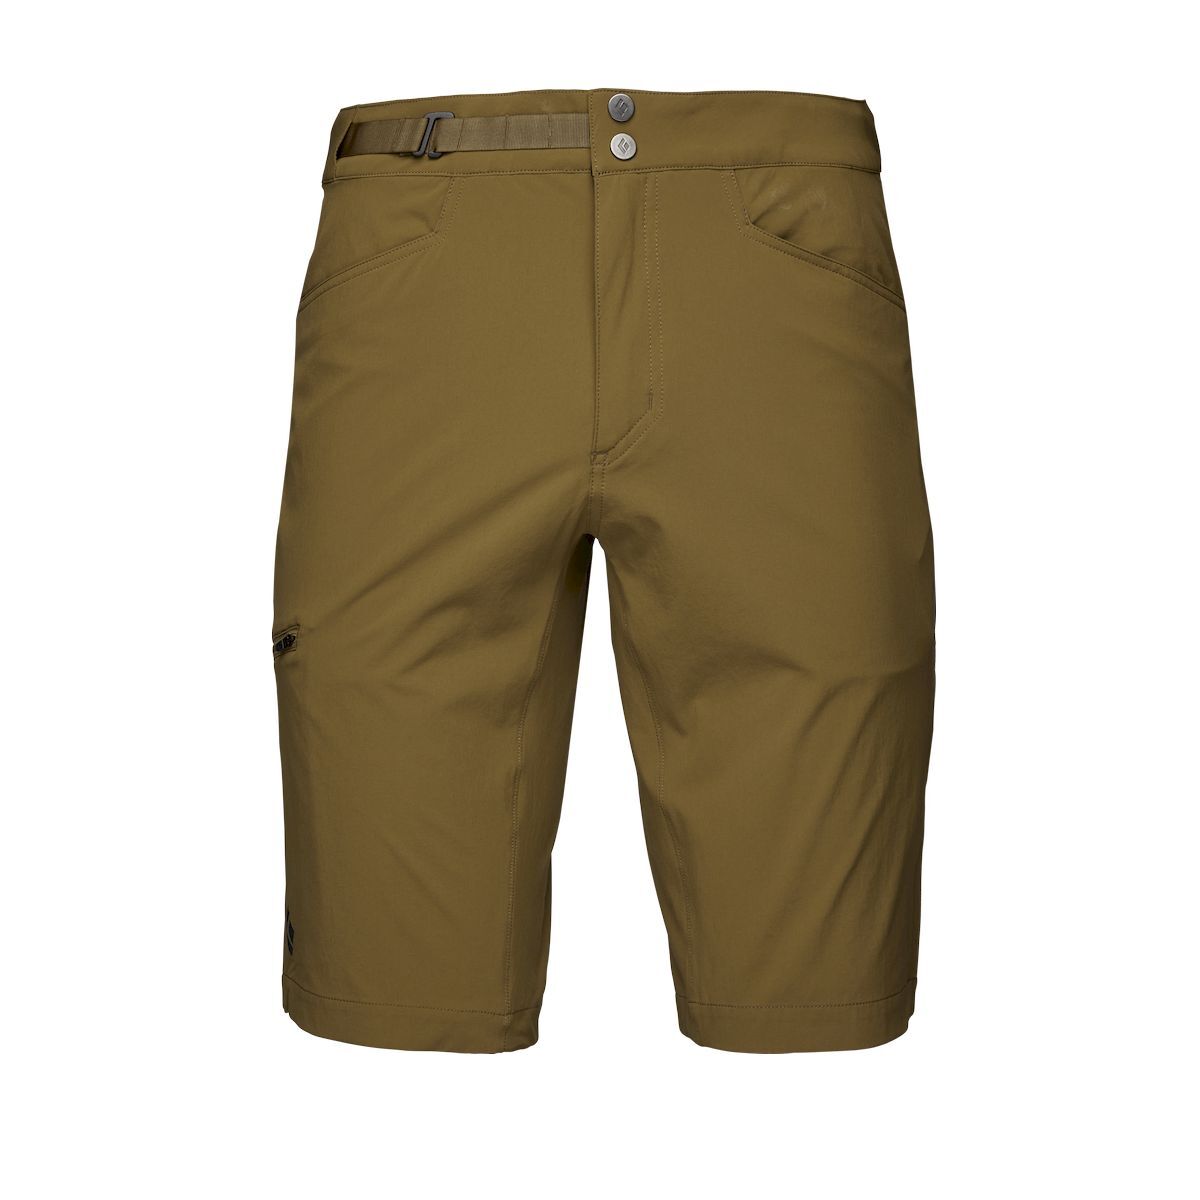 Black Diamond Valley Shorts - Pantaloncini da arrampicata - Uomo